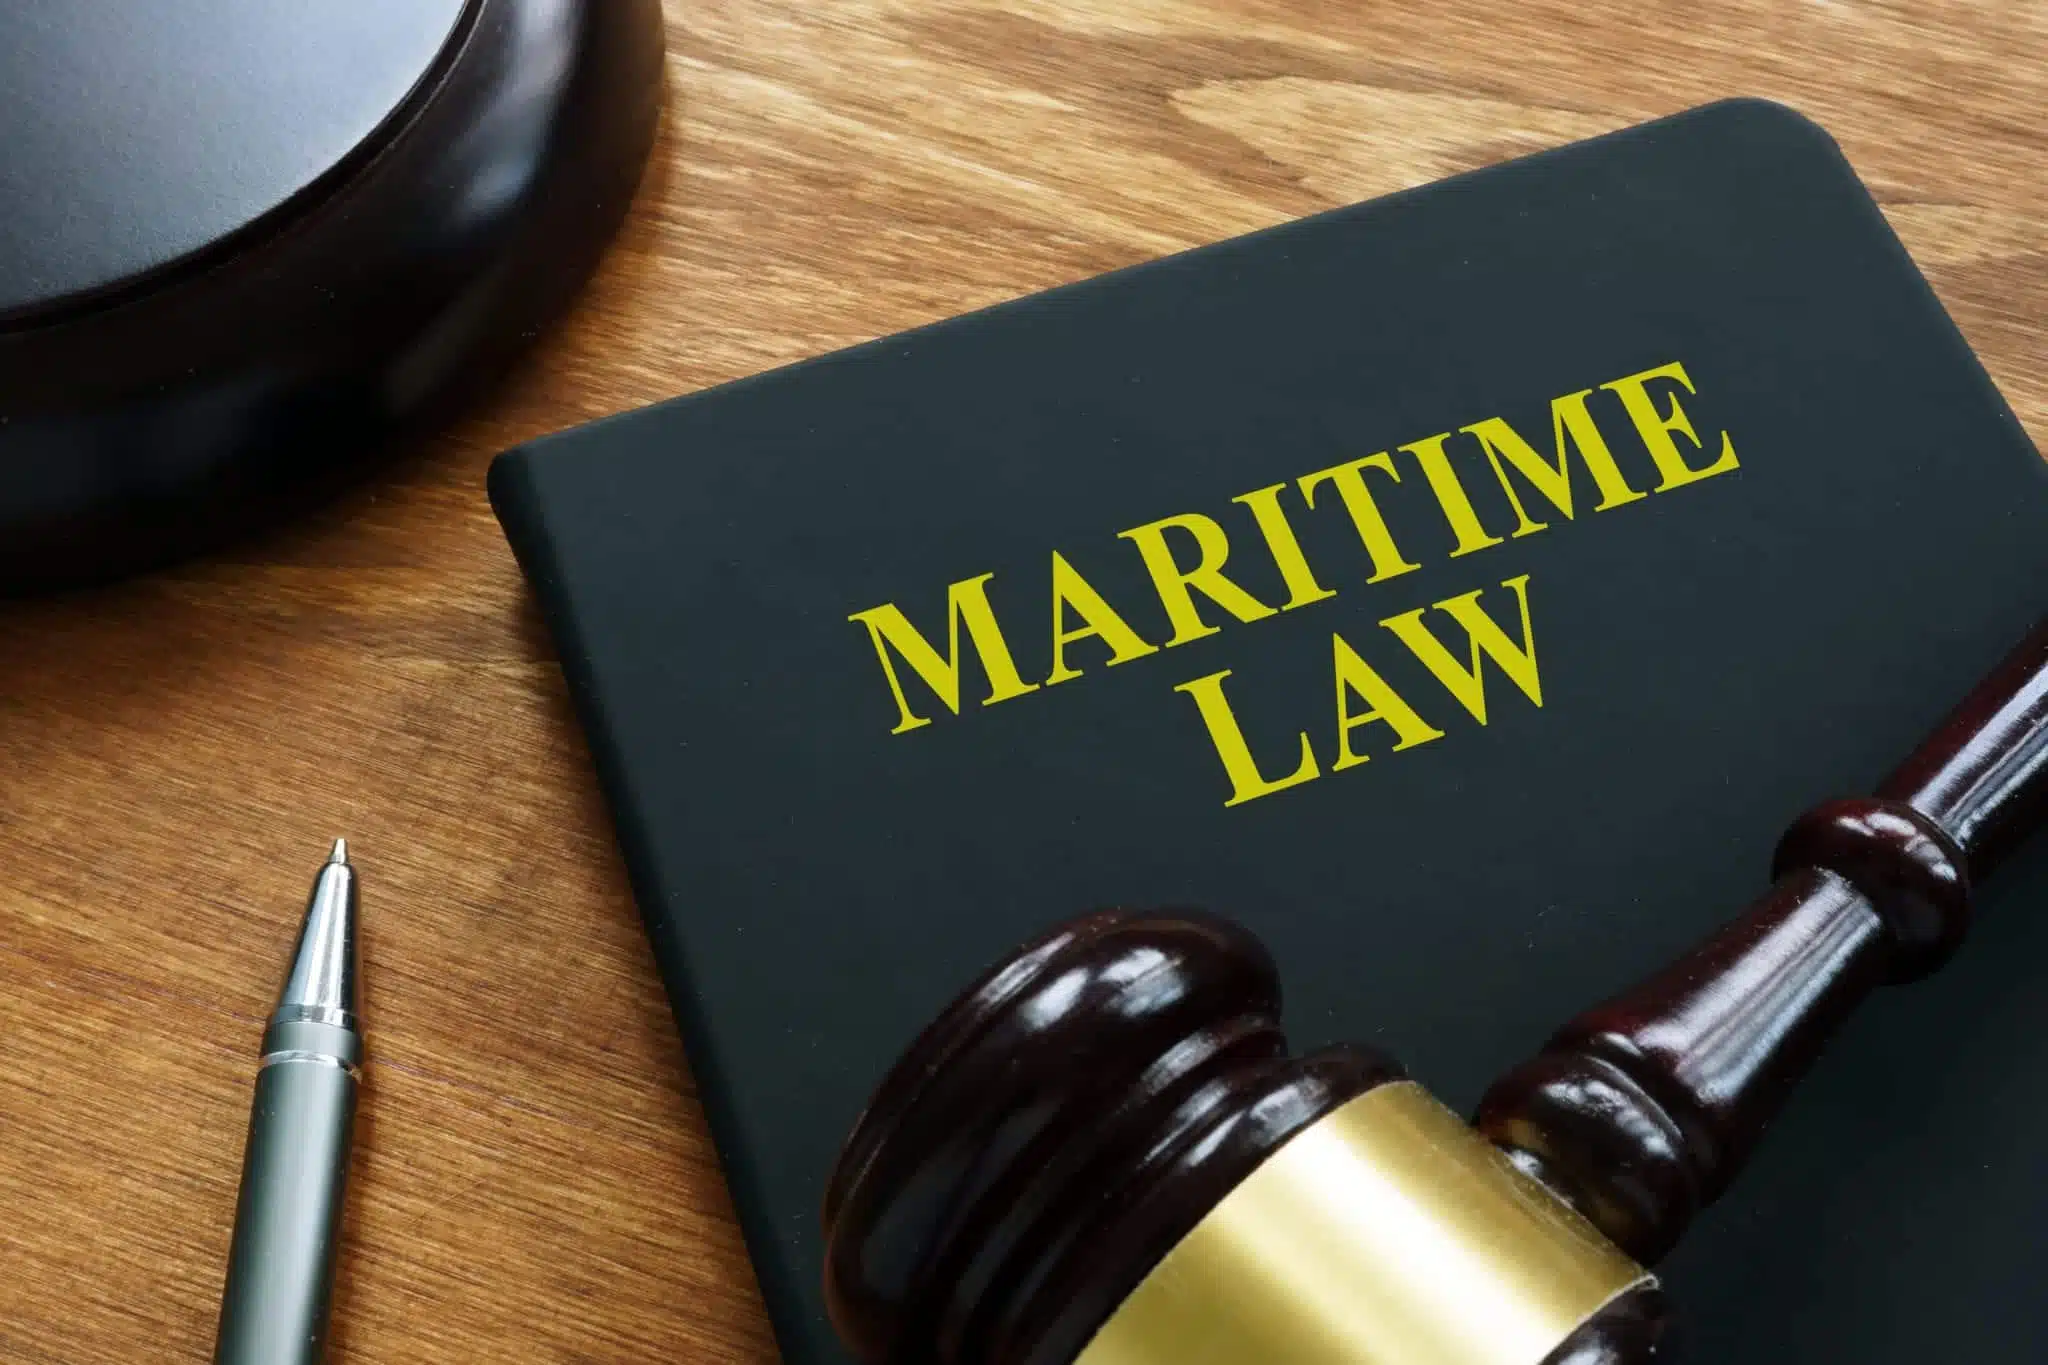 Maritime Lawyer